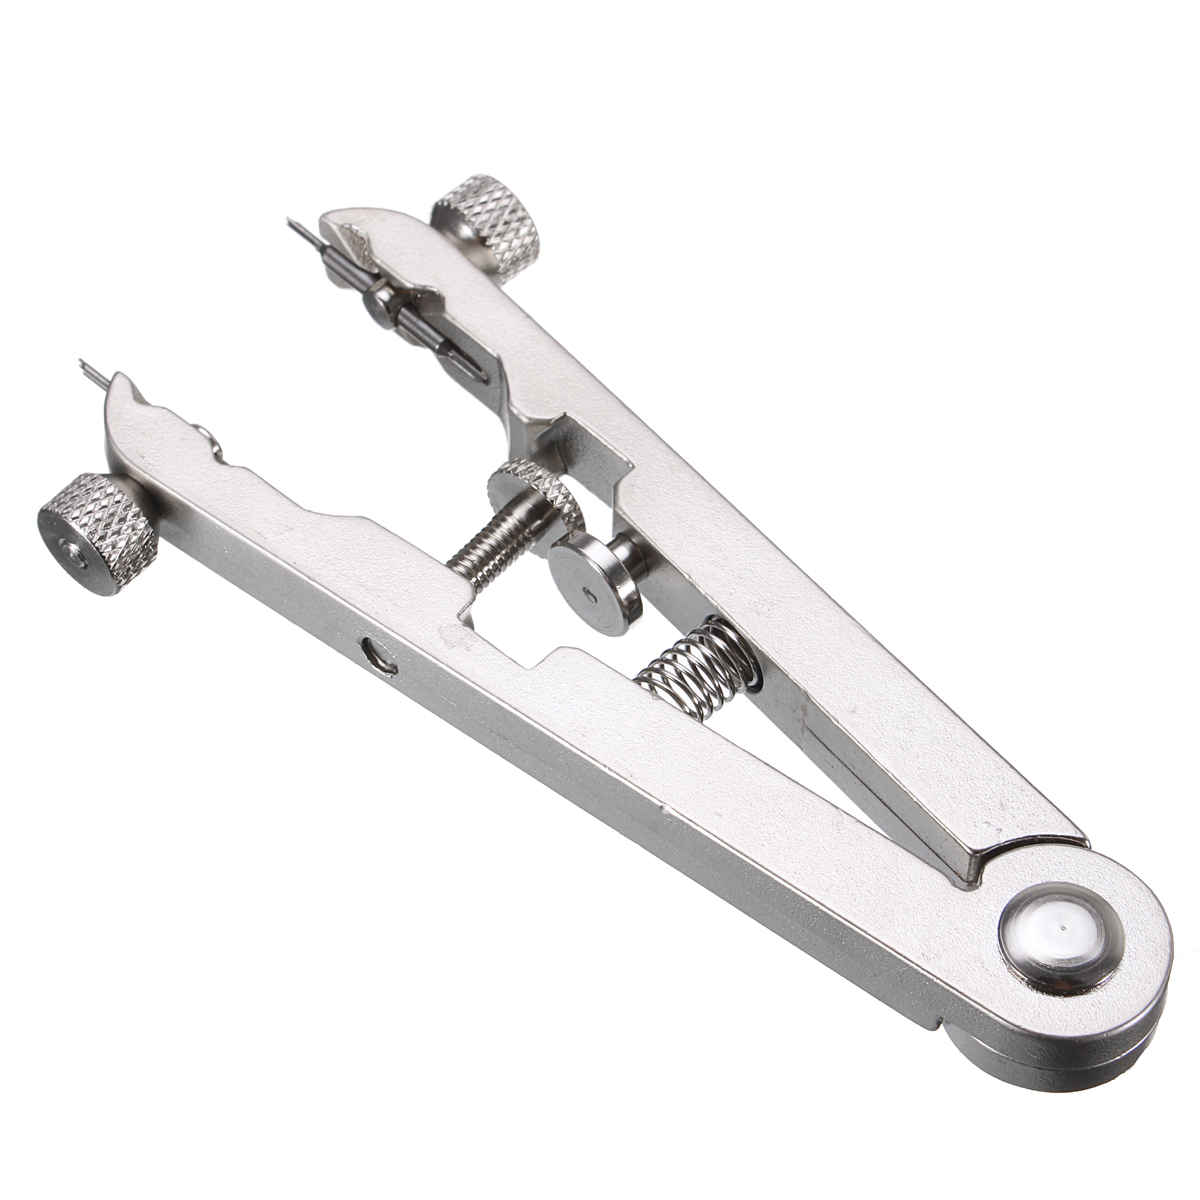 Bracelet-Spring-Bar-Remover-Watch-Tweezer-Strip-Replace-Tool-For-ROLEX-6825-1183855-5